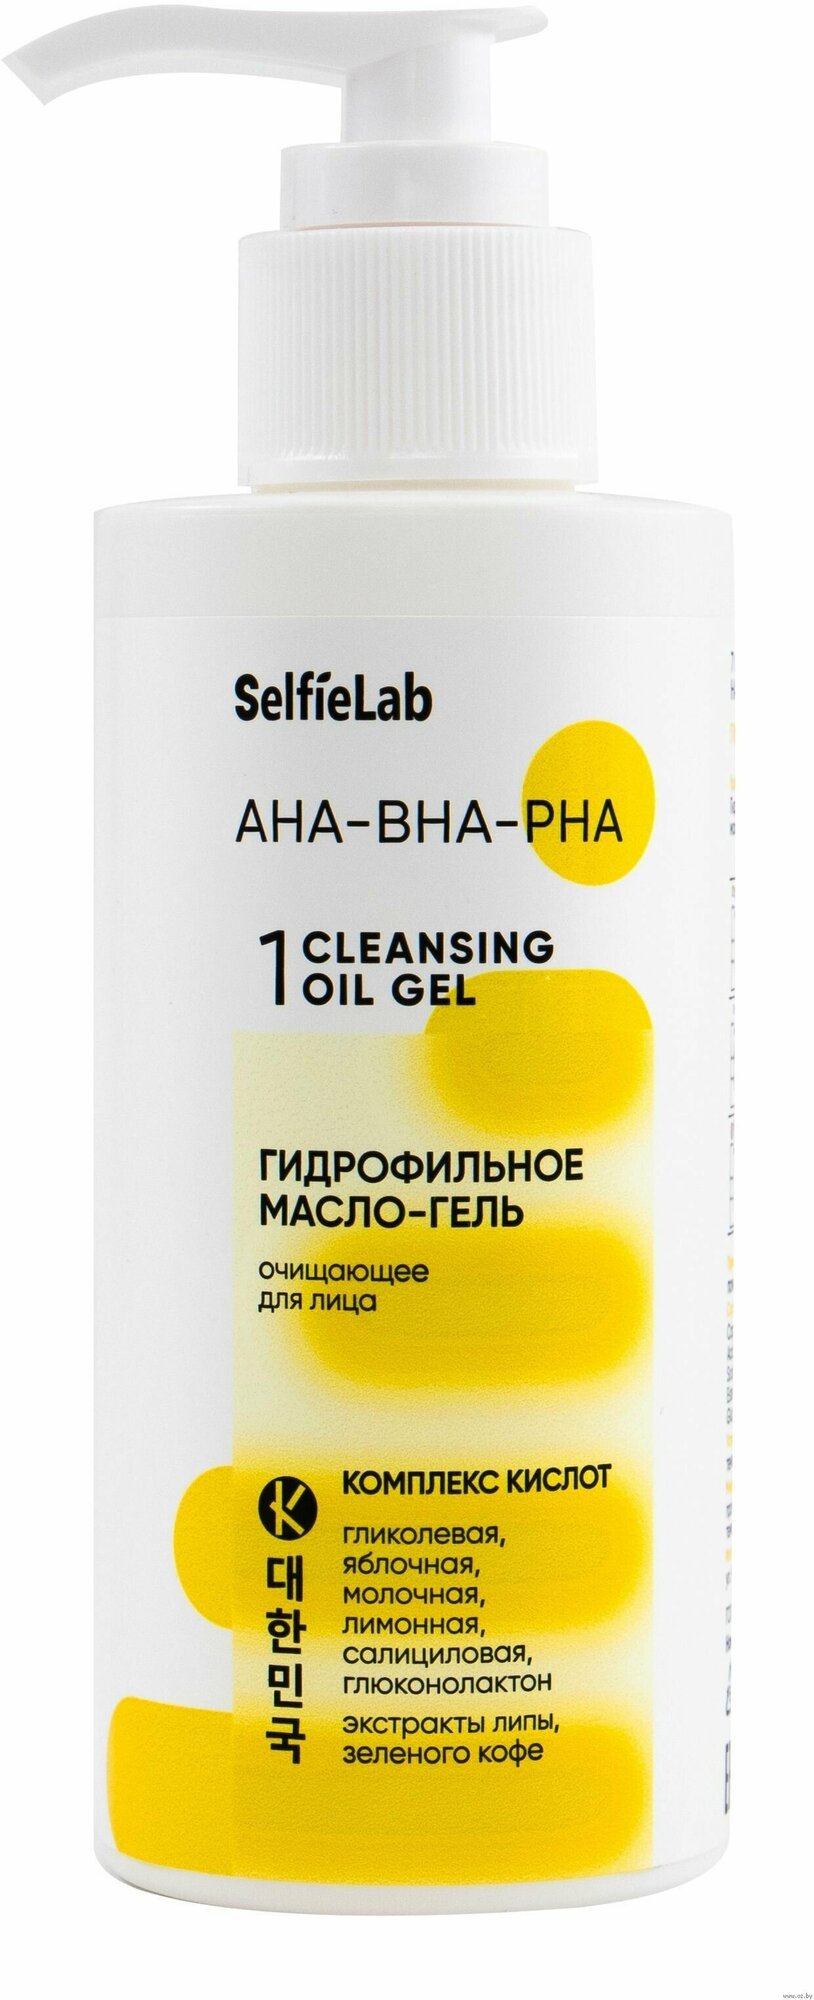 SelfieLab Гидрофильное масло AHA-BHA-PHA для снятия макияжа, 150 мл